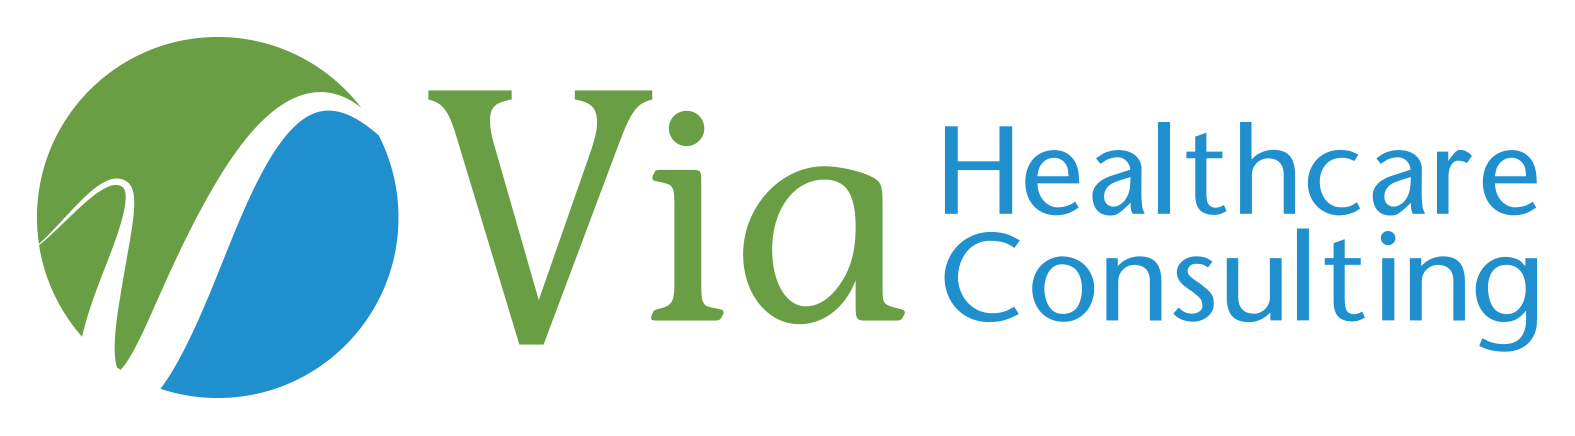 Via Healthcare Consulting logo